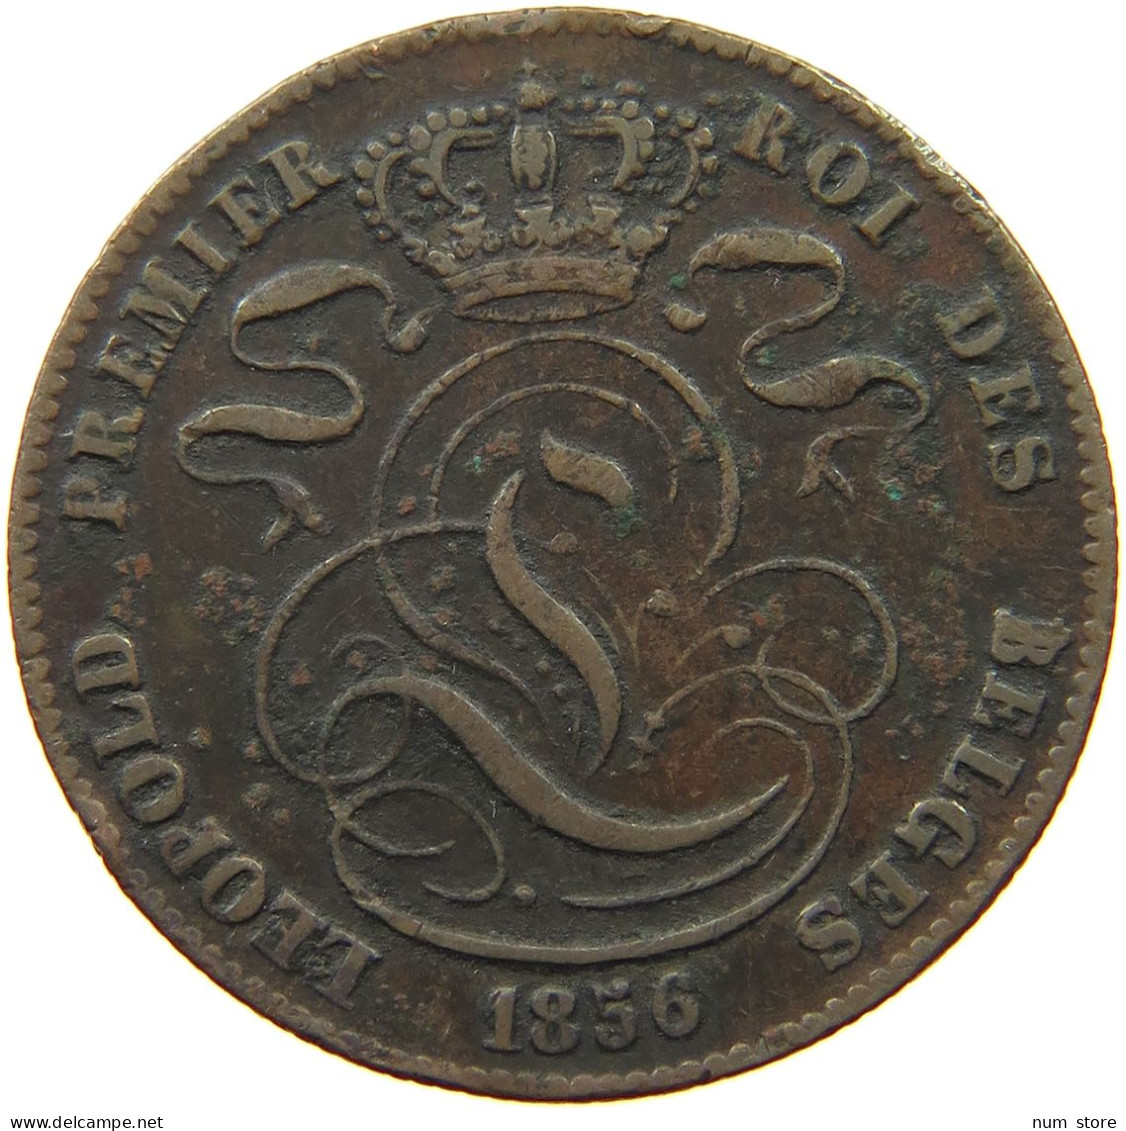 BELGIUM 5 CENTIMES 1856 Leopold I. (1831-1865) #s046 0419 - 5 Centimes